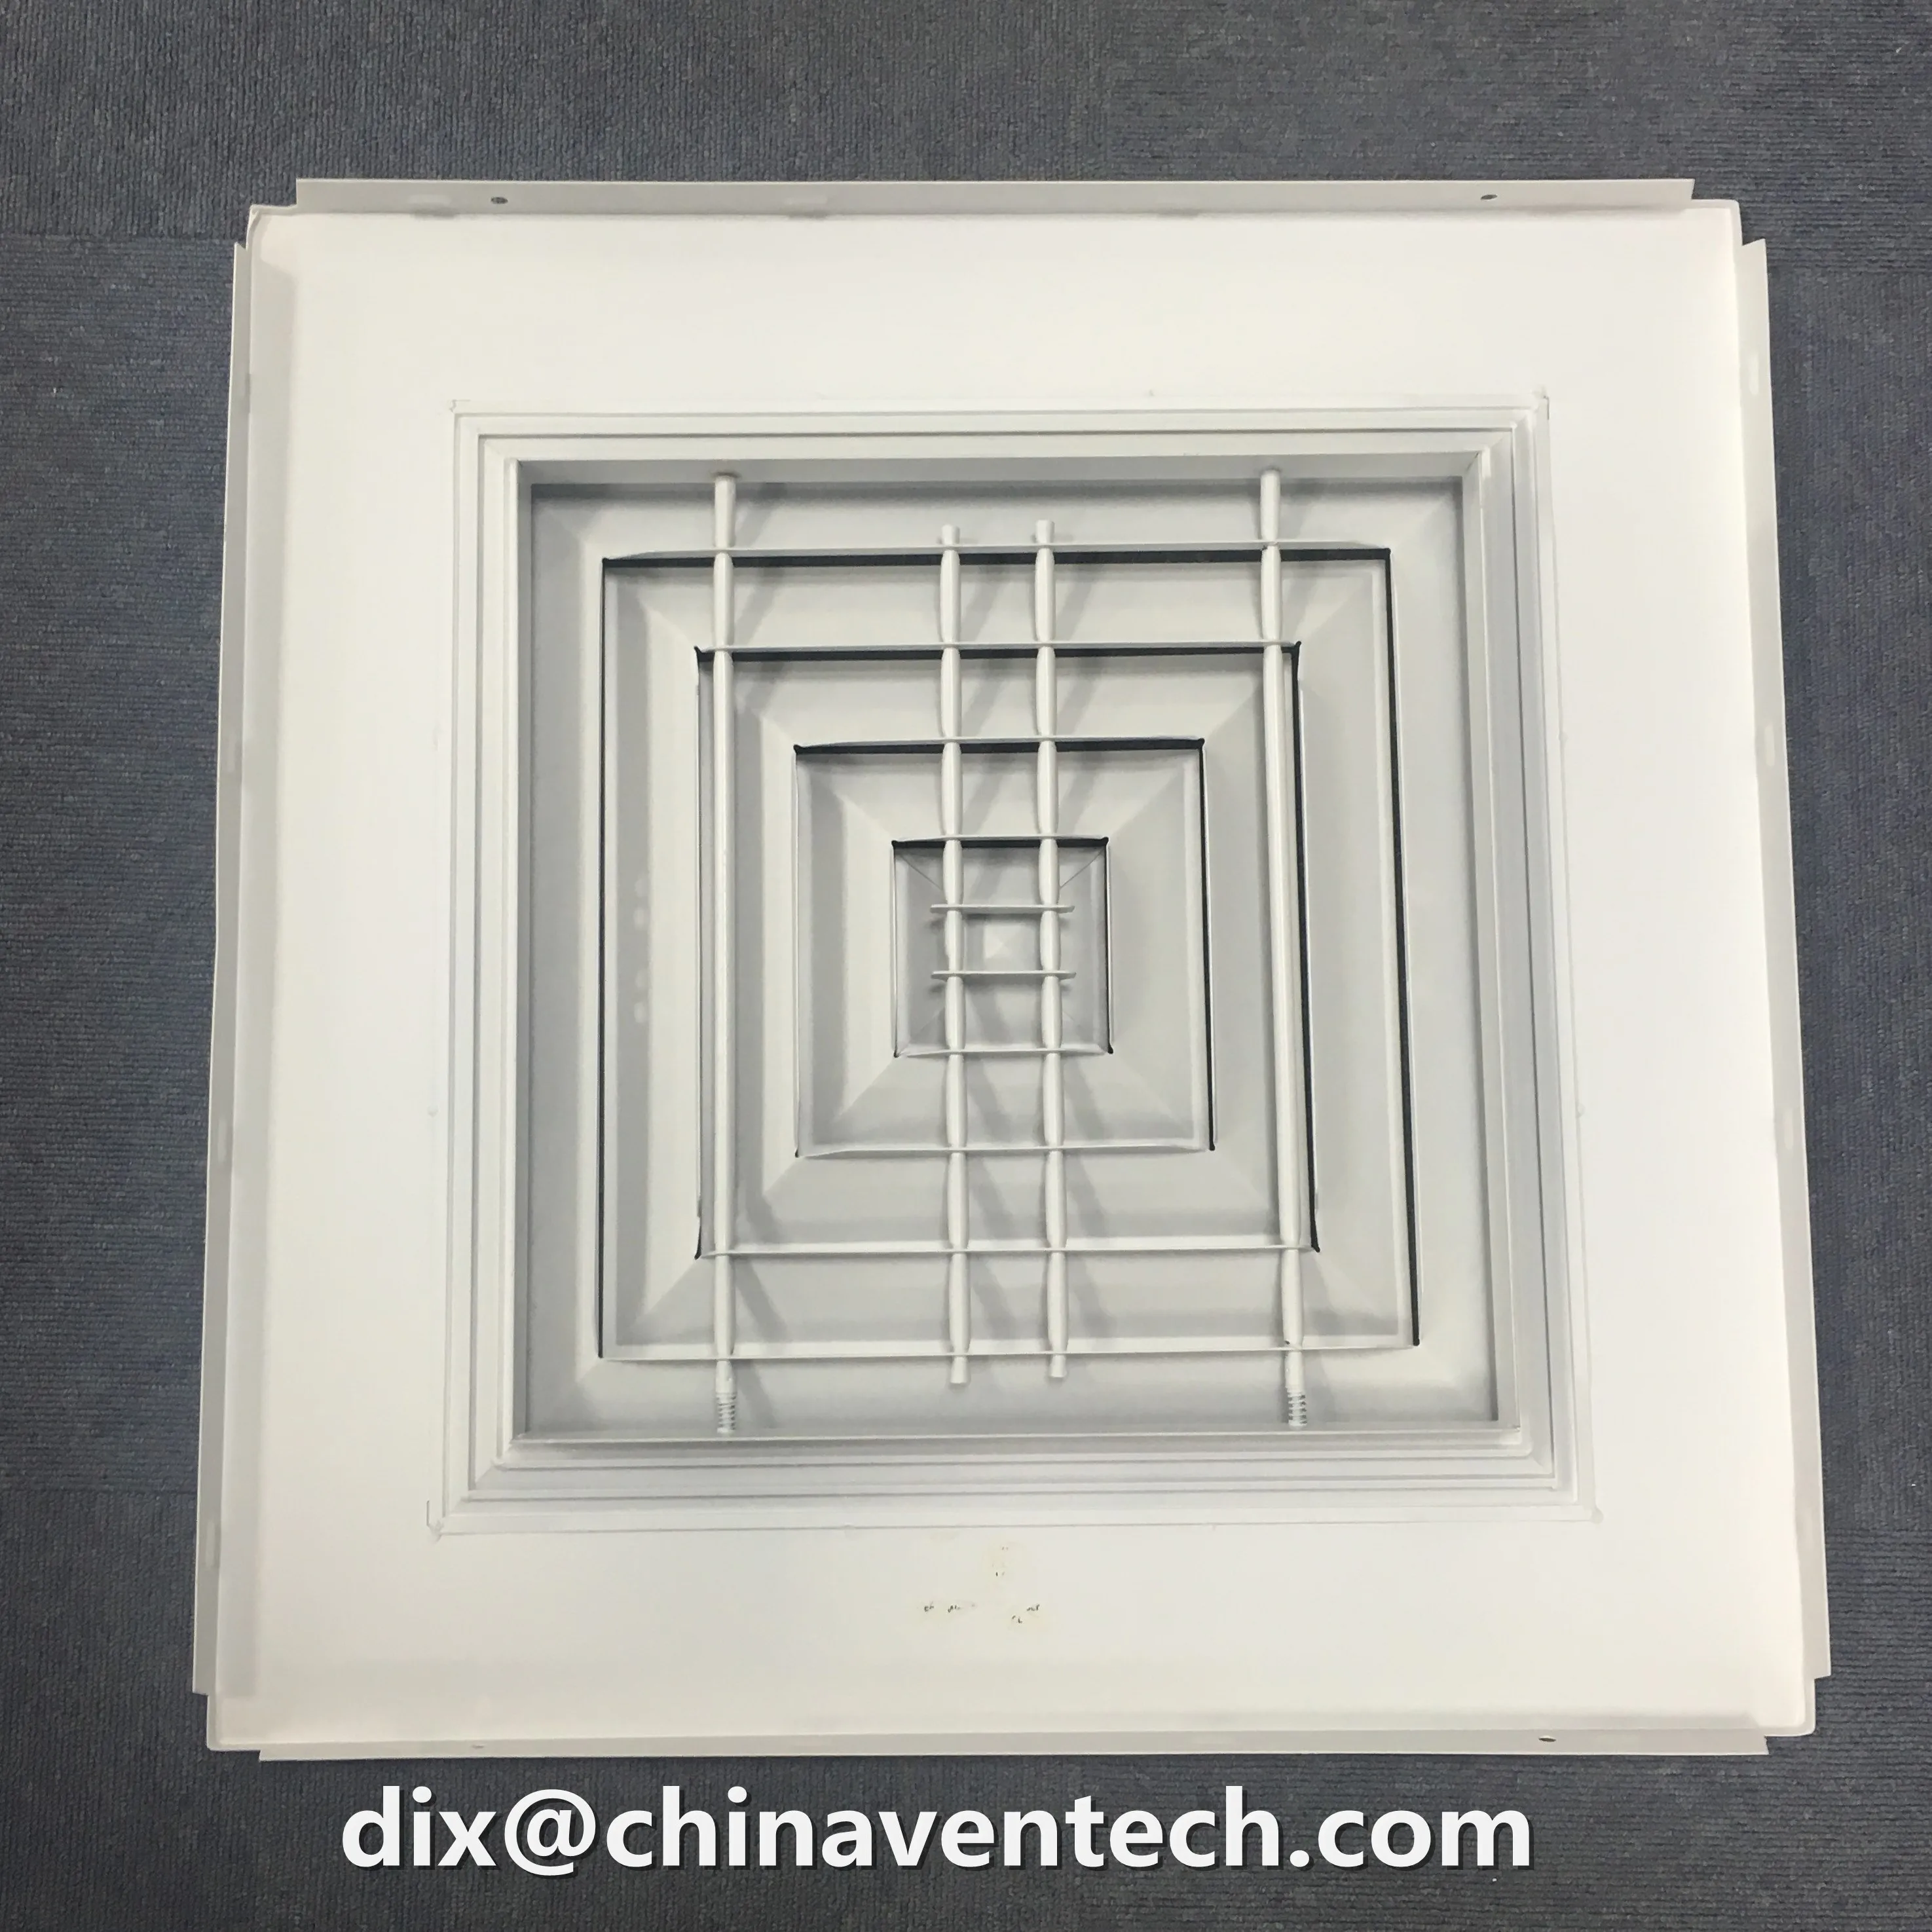 Hvac air conditioner ceiling tile 4 way square air diffuser